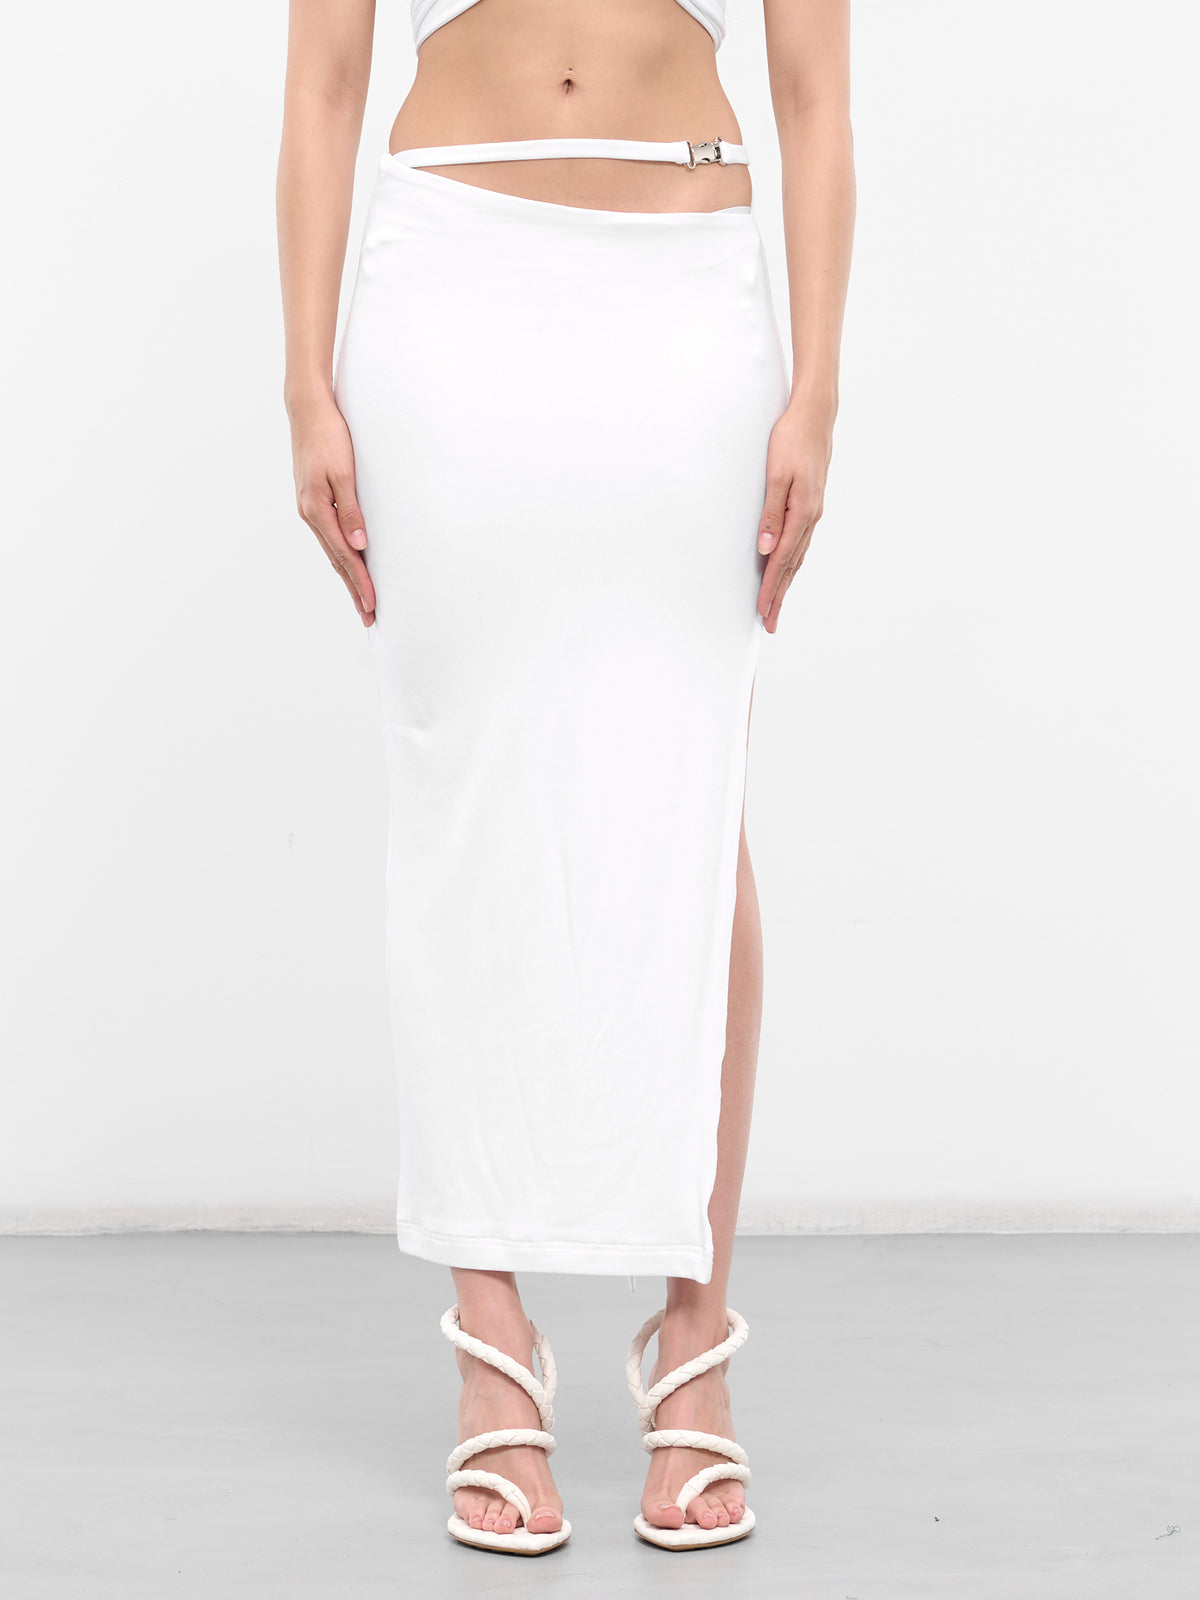 Buckle Strap Skirt (BSS-WHITE)